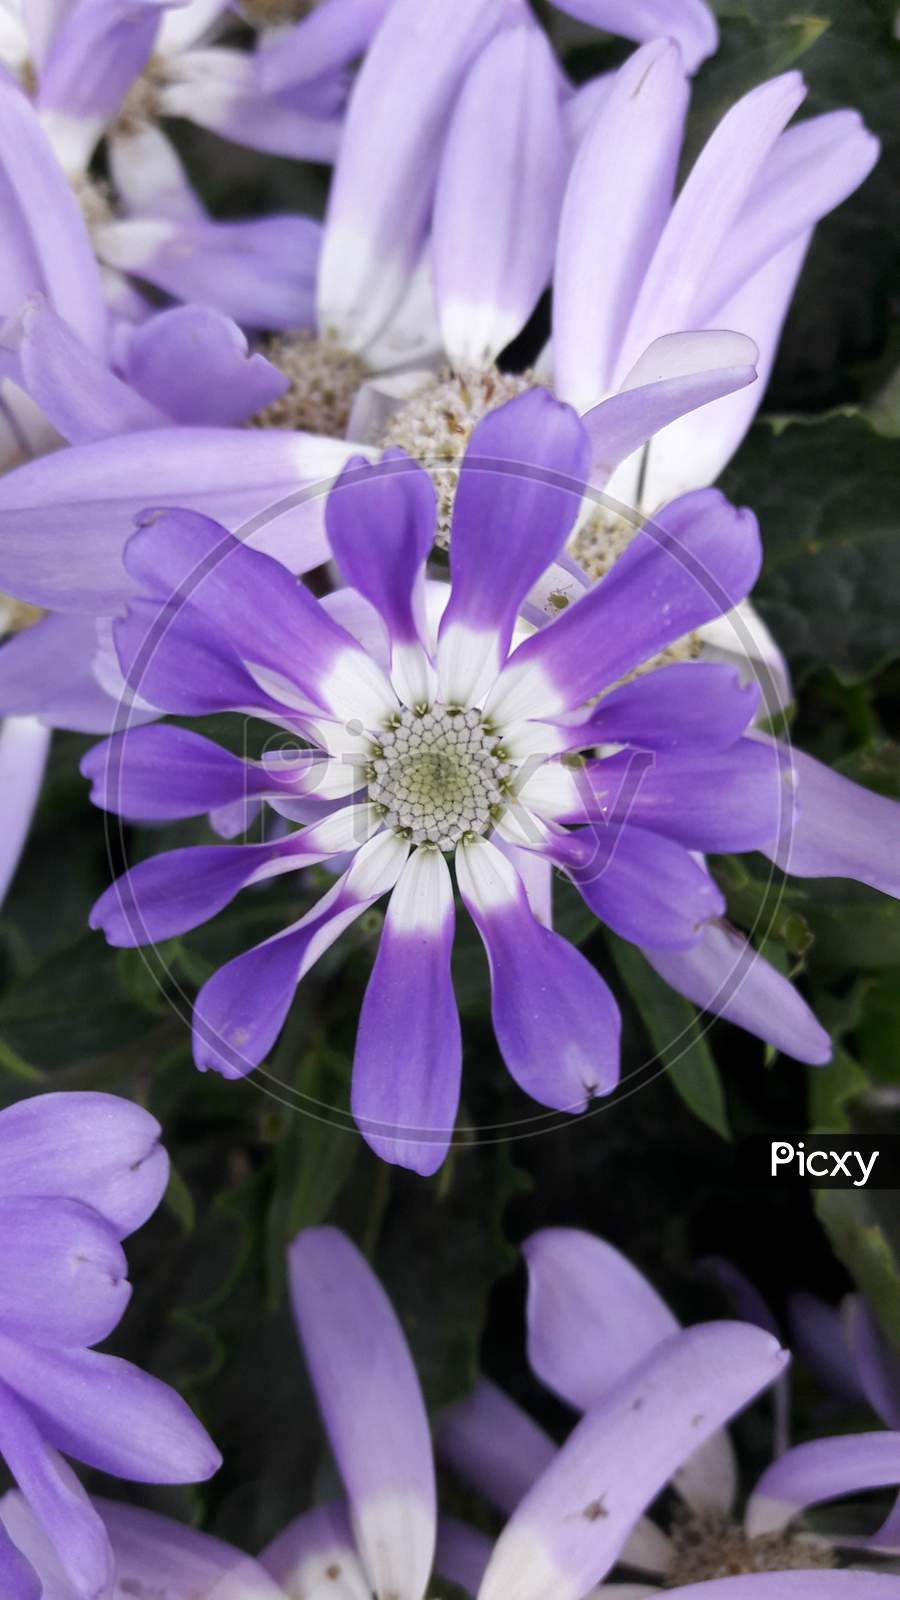 Pericallis flower